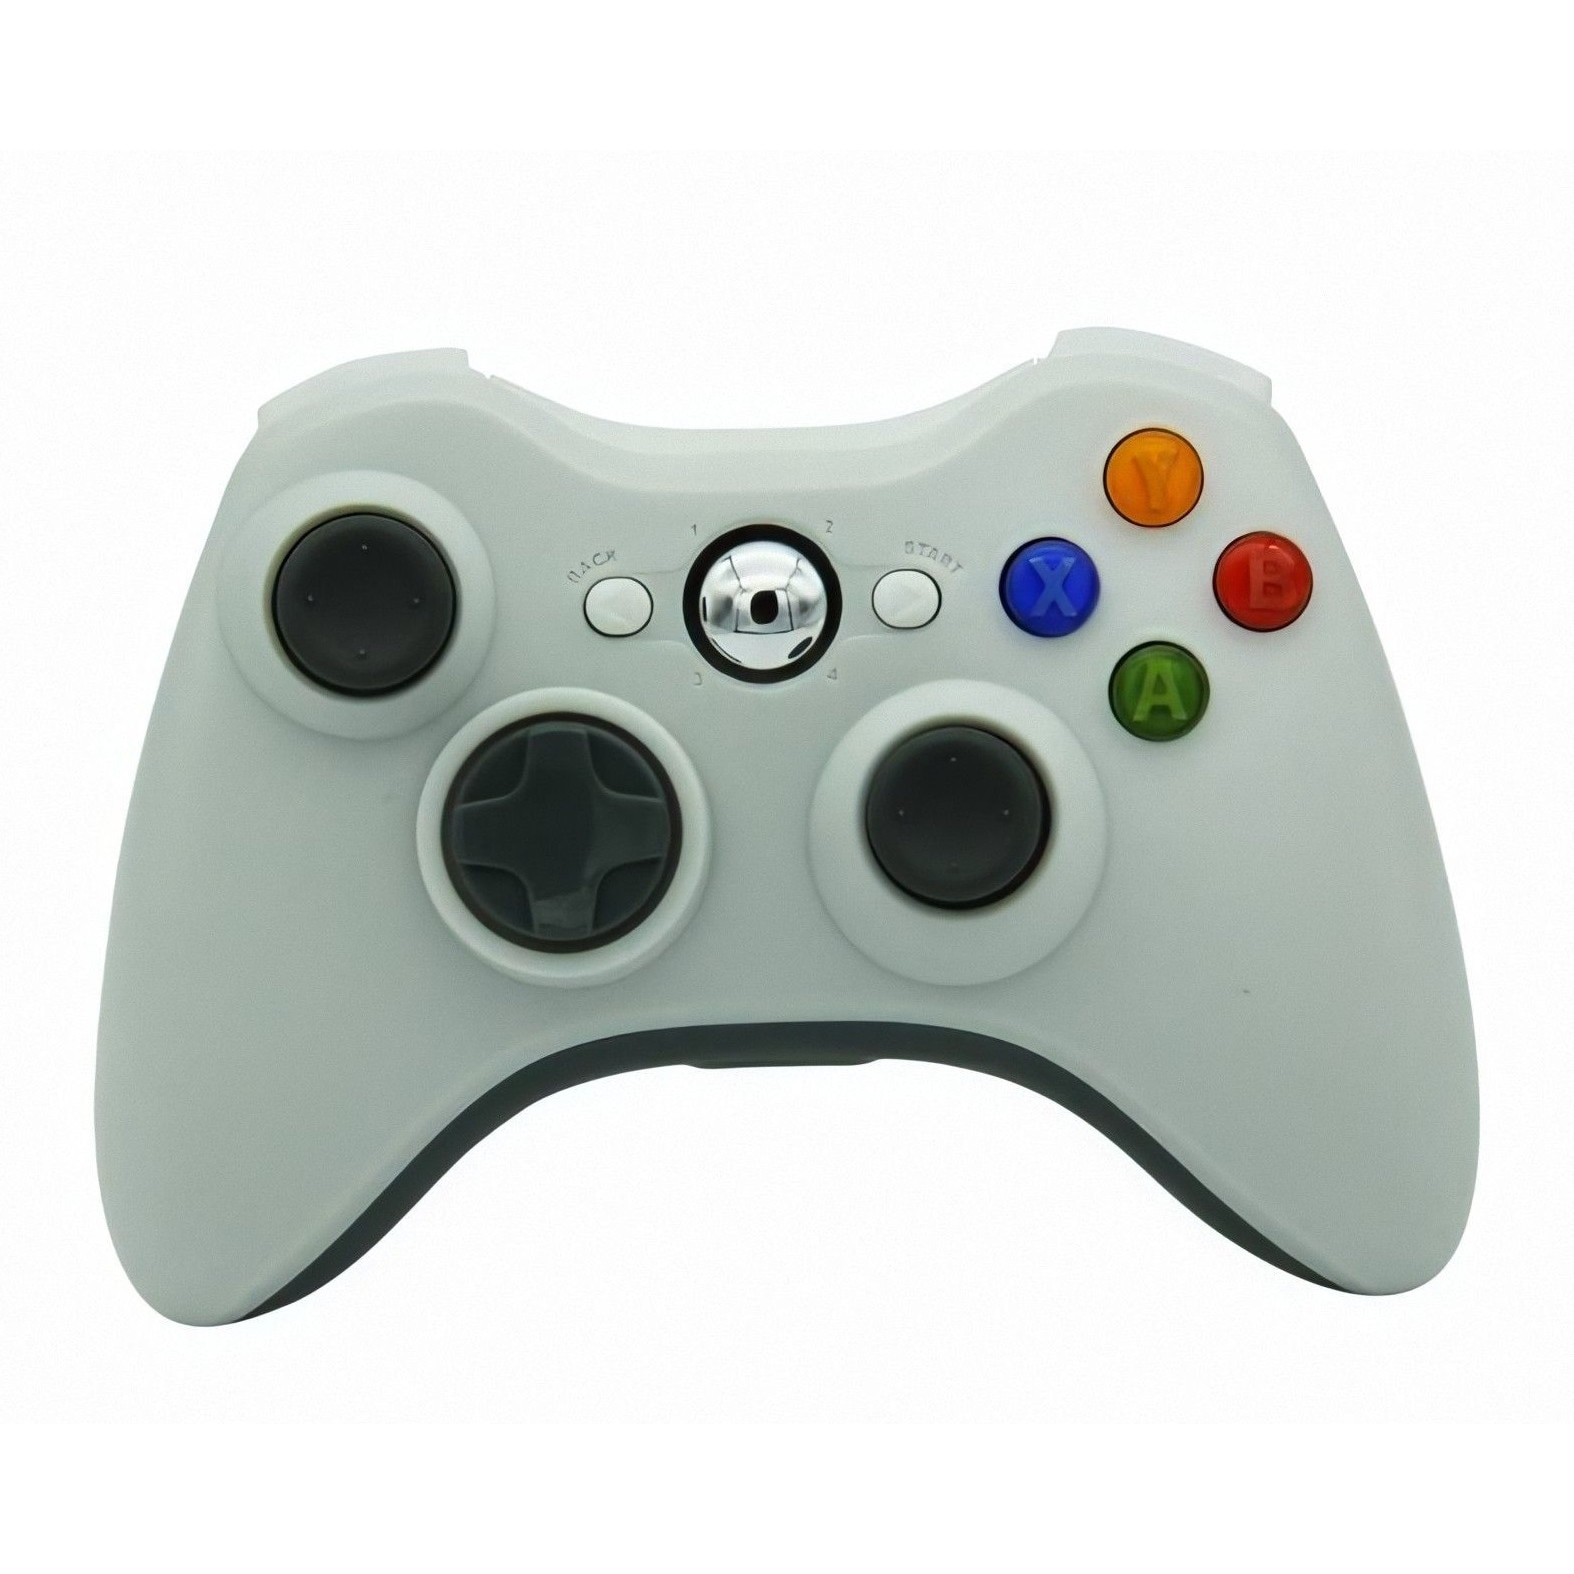 Defender xbox. Геймпад Xbox 360. Геймпад Microsoft Xbox 360 Wireless Controller for Windows. Джойстик Xbox 360 2.4g Wireless черный. Xbox 360 Gamepad White.